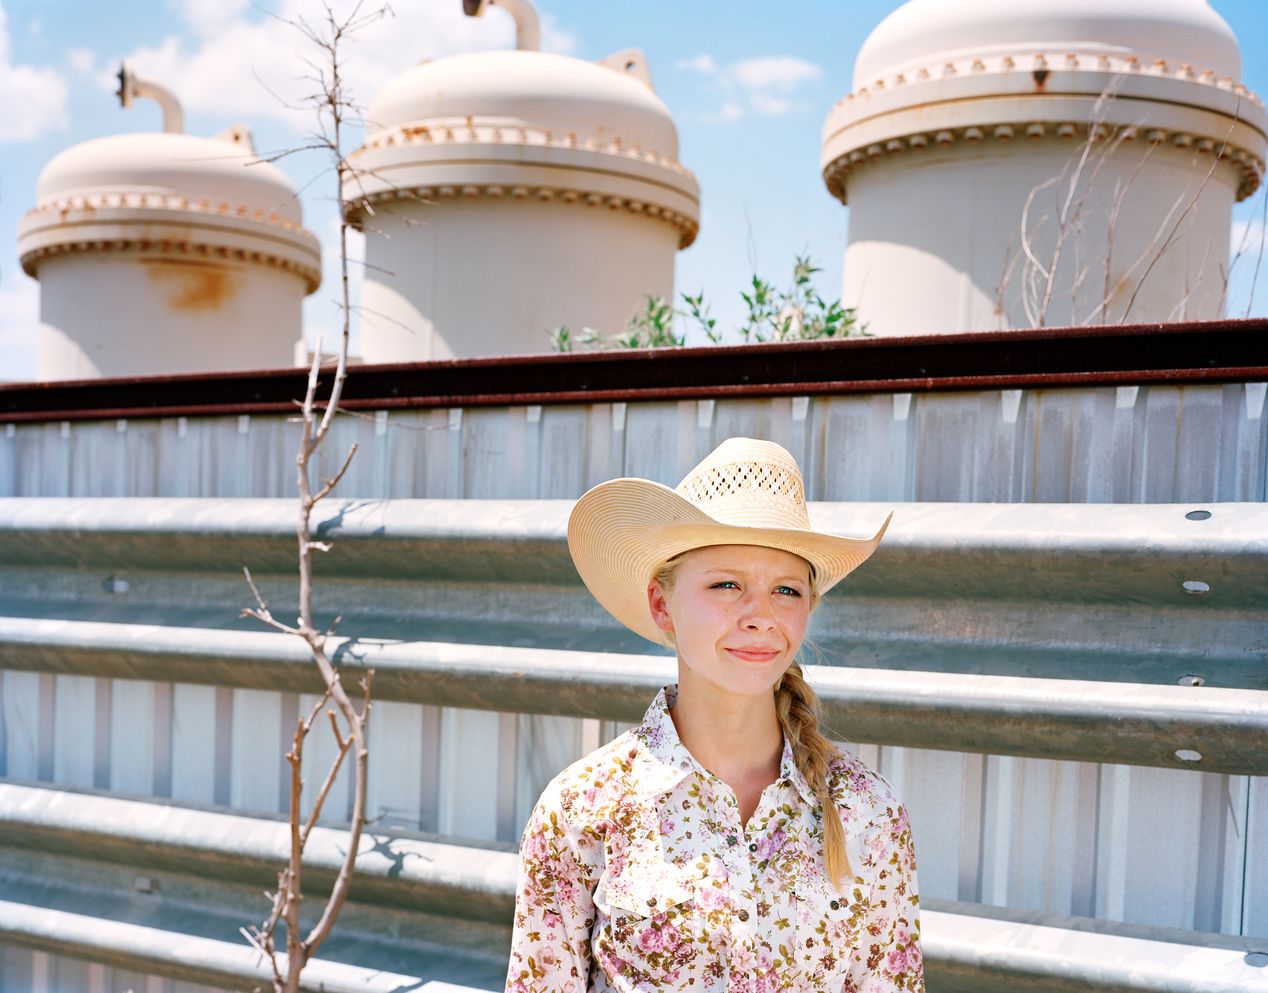 Teenage rodeo girl posing next to silos, environmental portrait photography, Ilona Szwarc, contemporary Los Angeles artist.